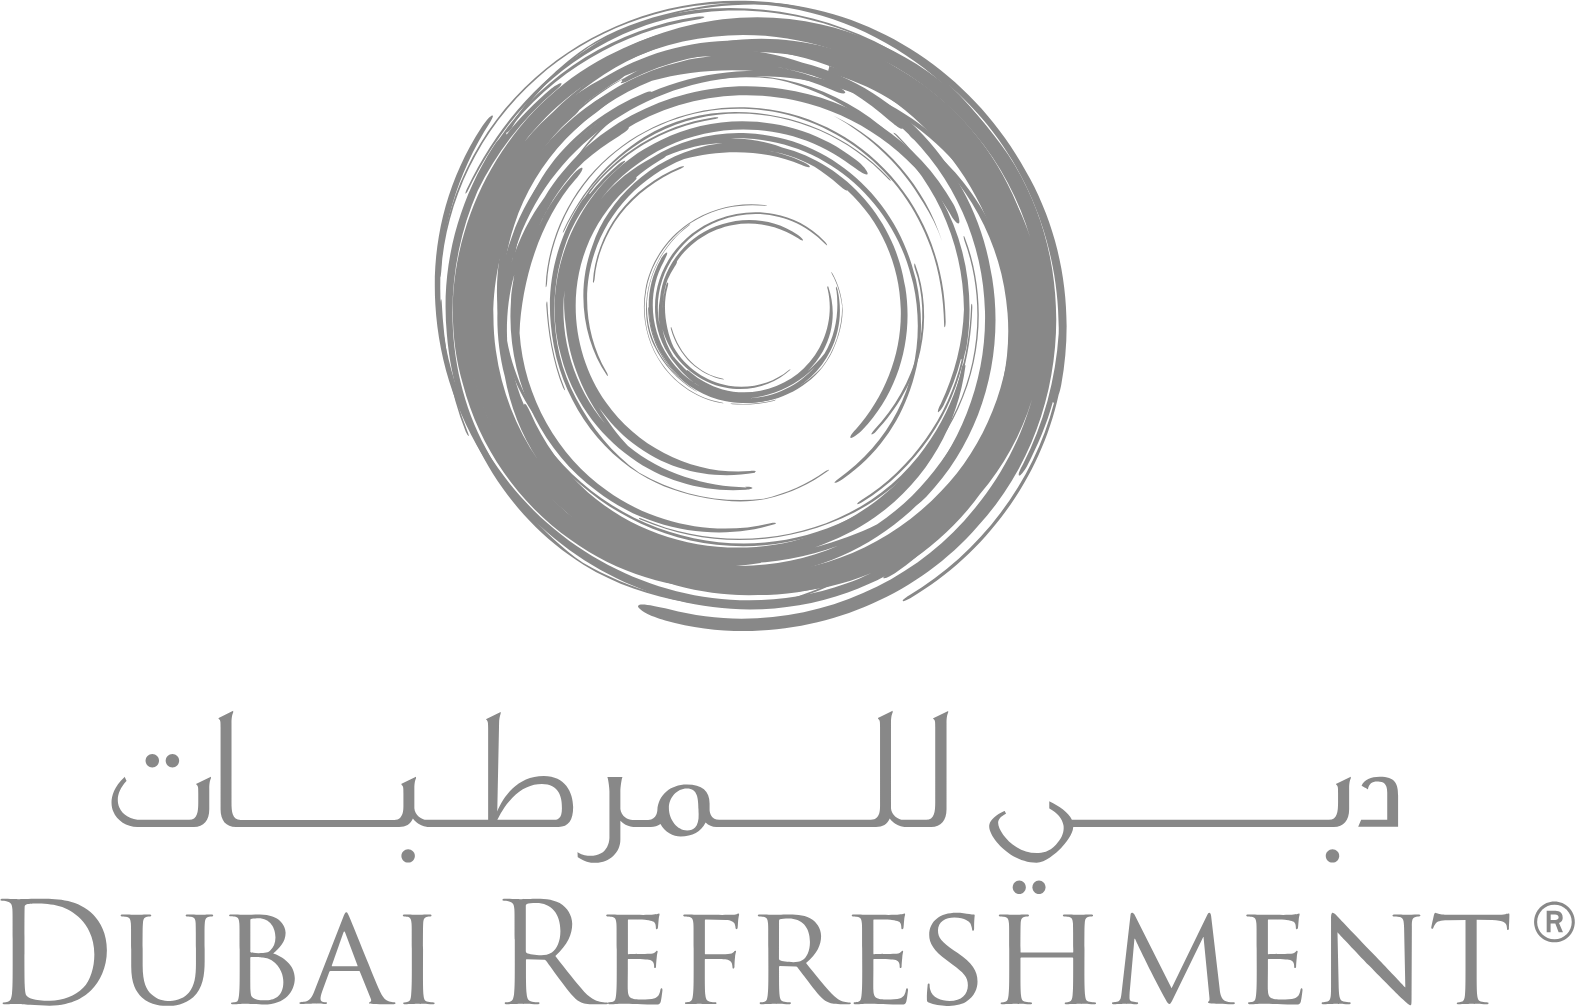 Dubai Refreshment logo large (transparent PNG)